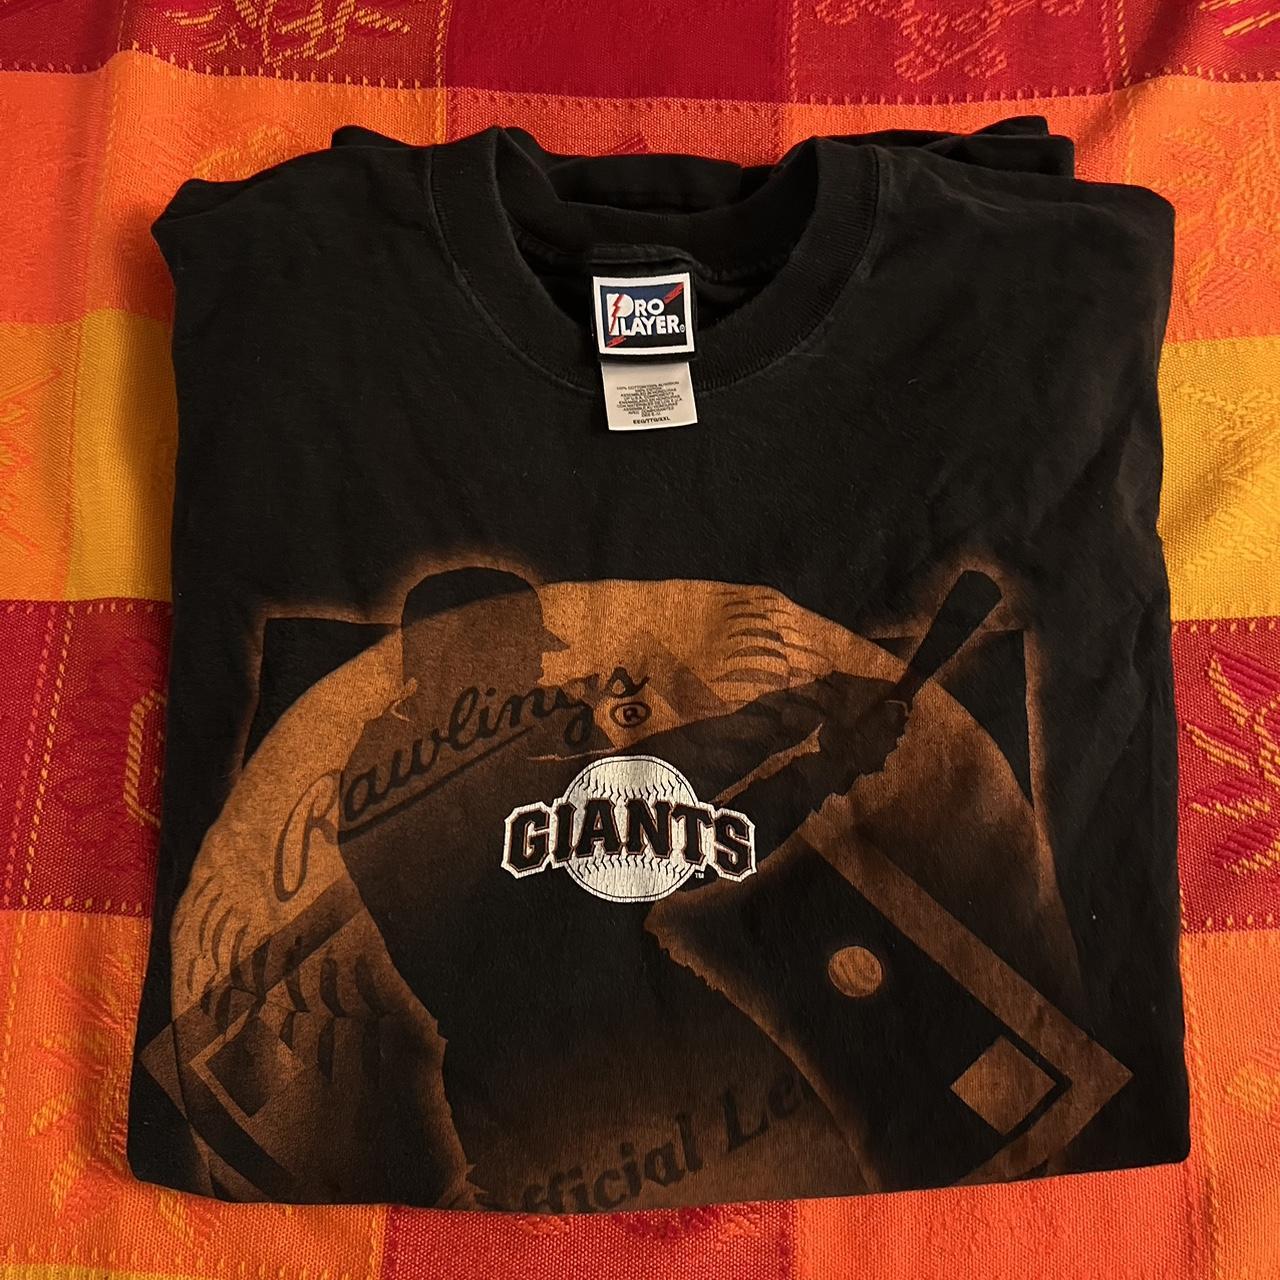 Vamos Gigantes” -> “lets go Giants” sf Giants shirt - Depop